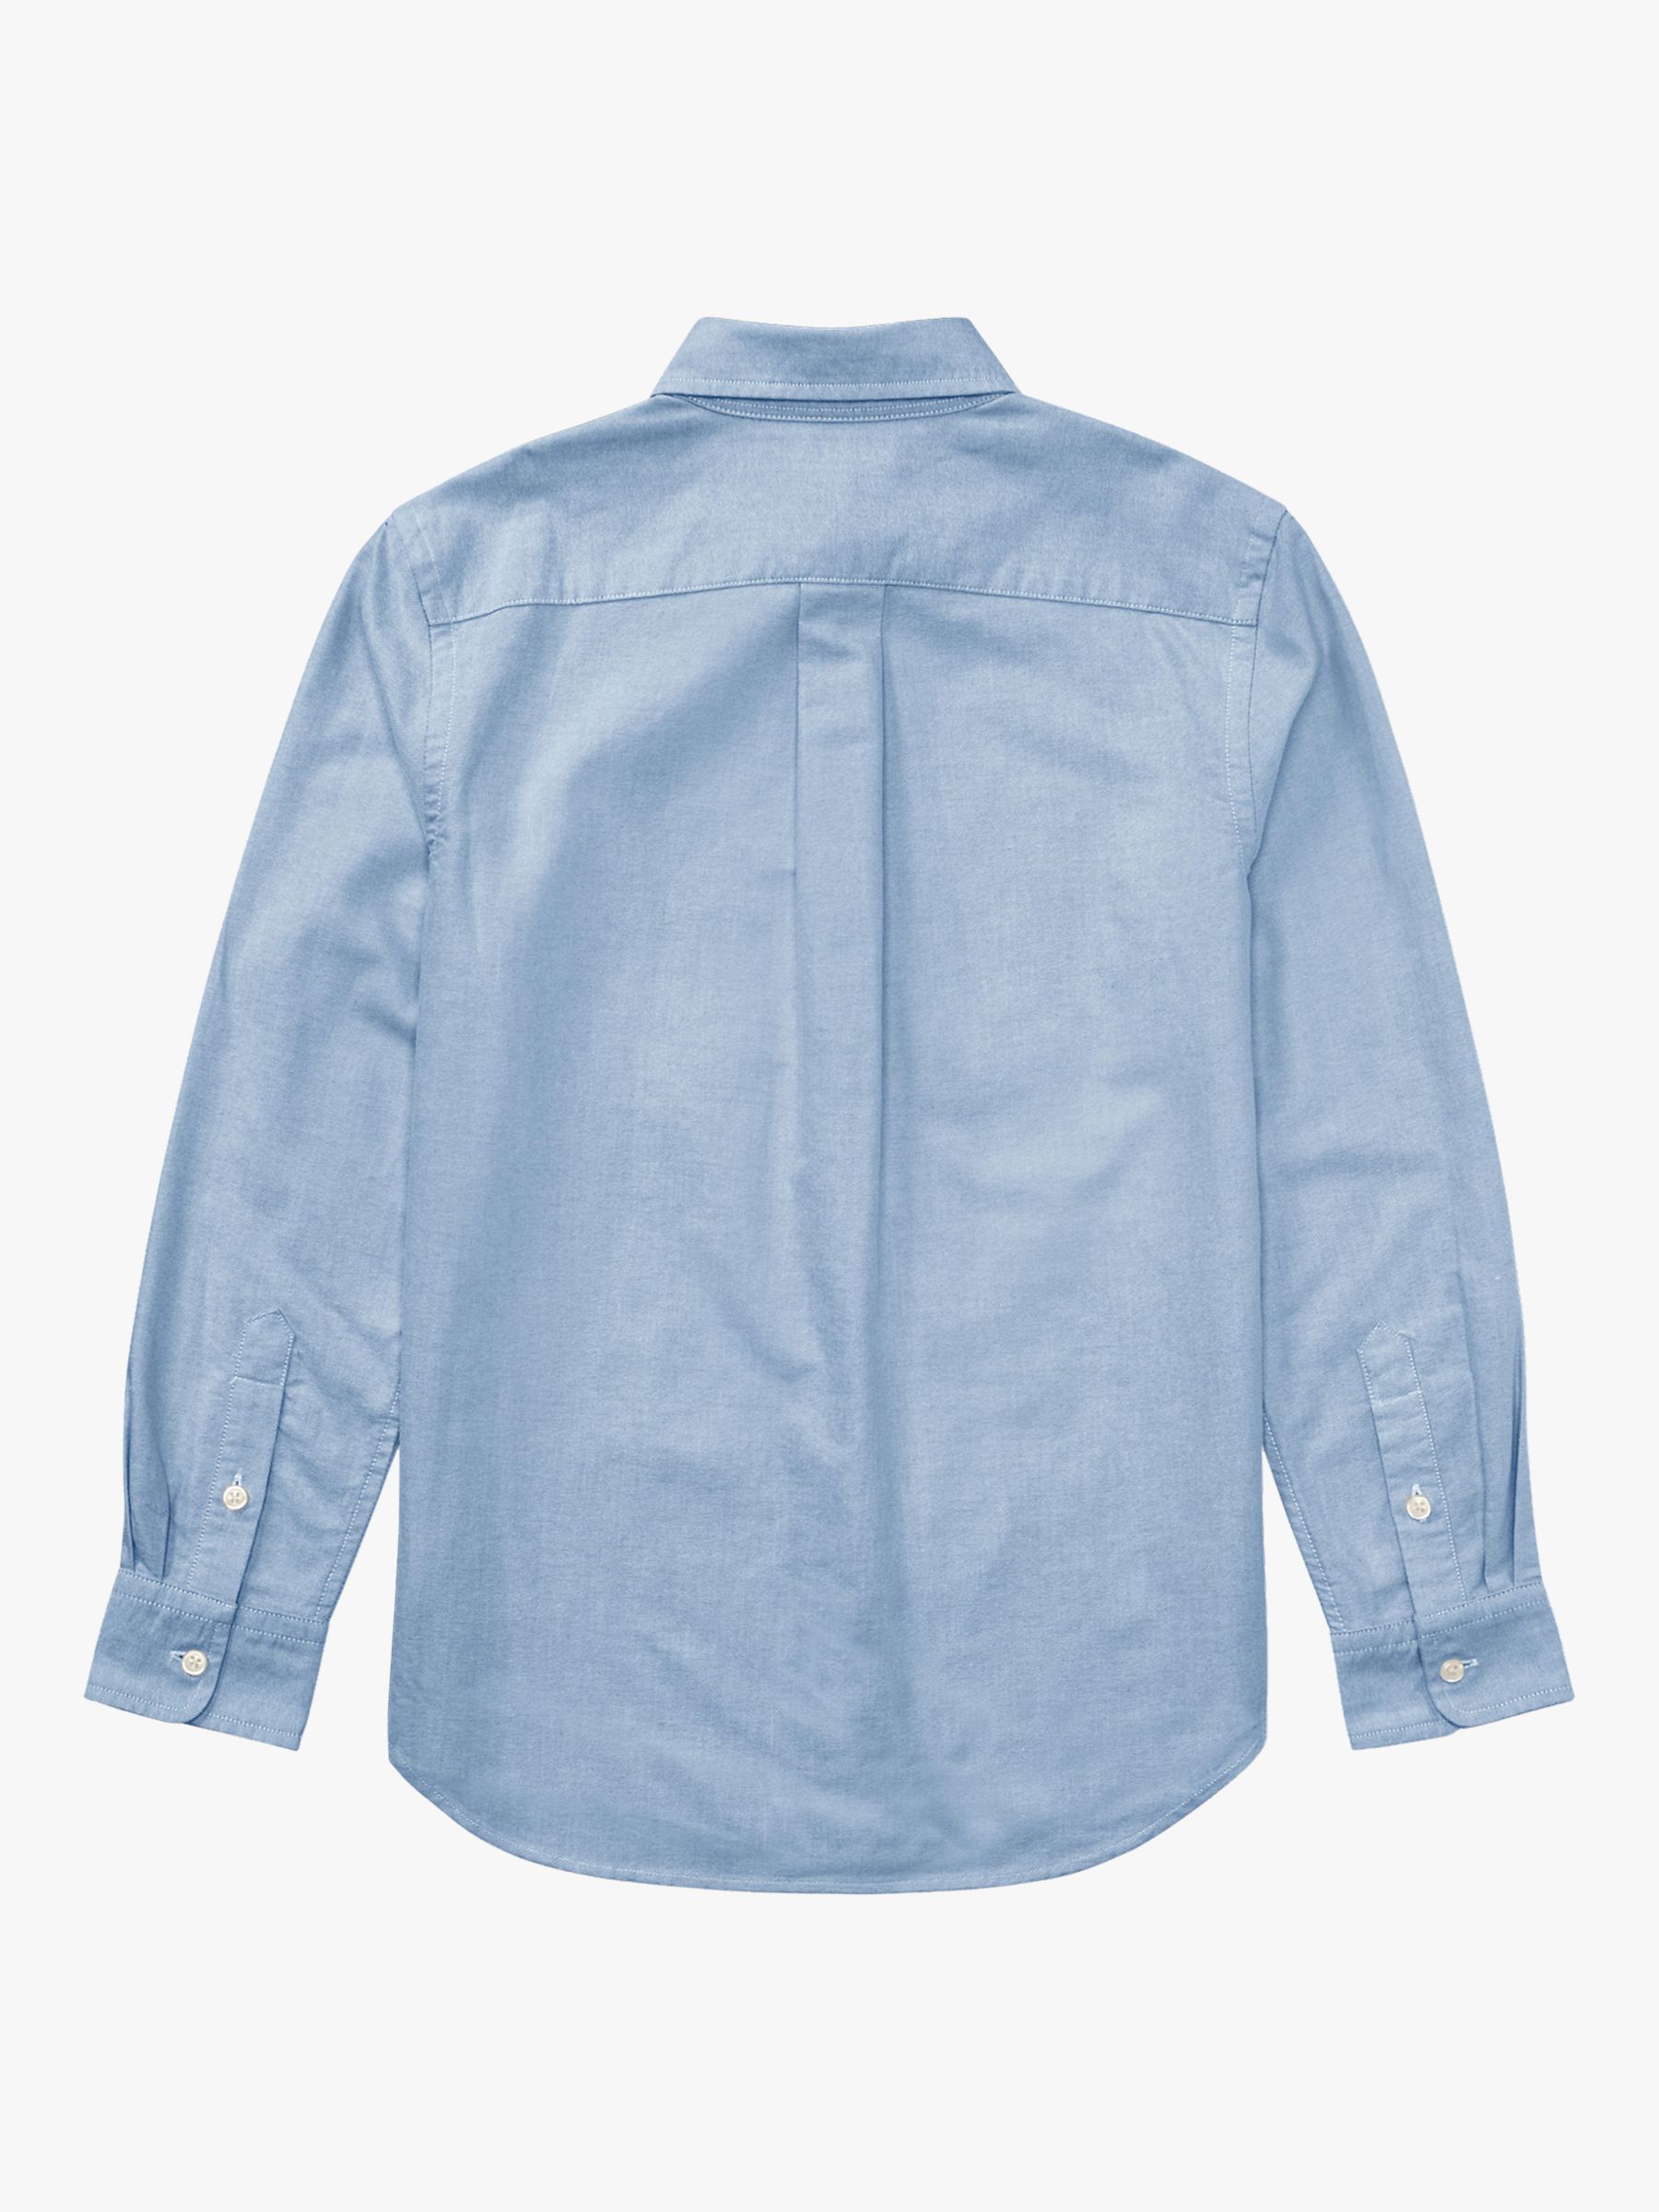 Polo Ralph Lauren Kids' Oxford Shirt, Blue, 5 years